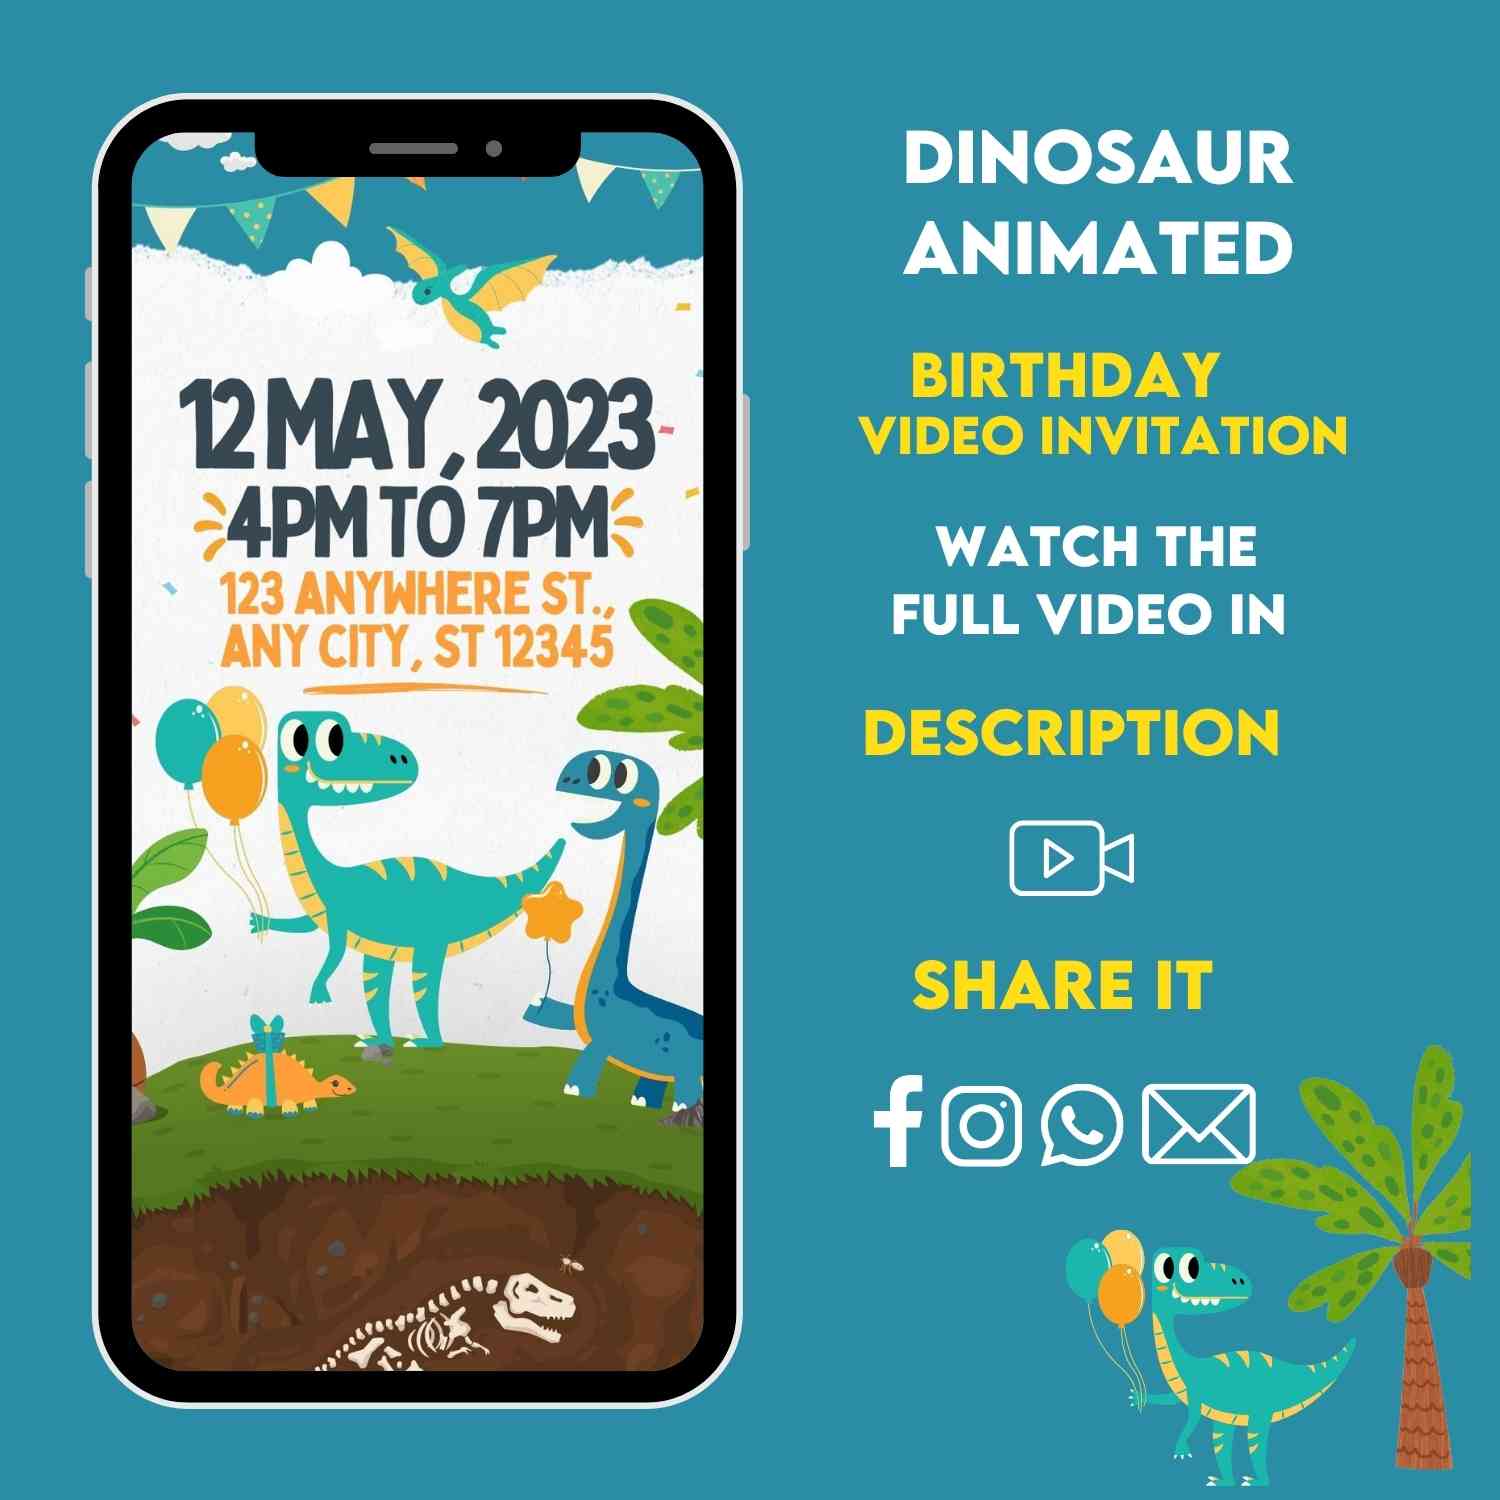 Dinosaur Animated Birthday Invitation | Custom Dinosaur Video Birthday Invitations